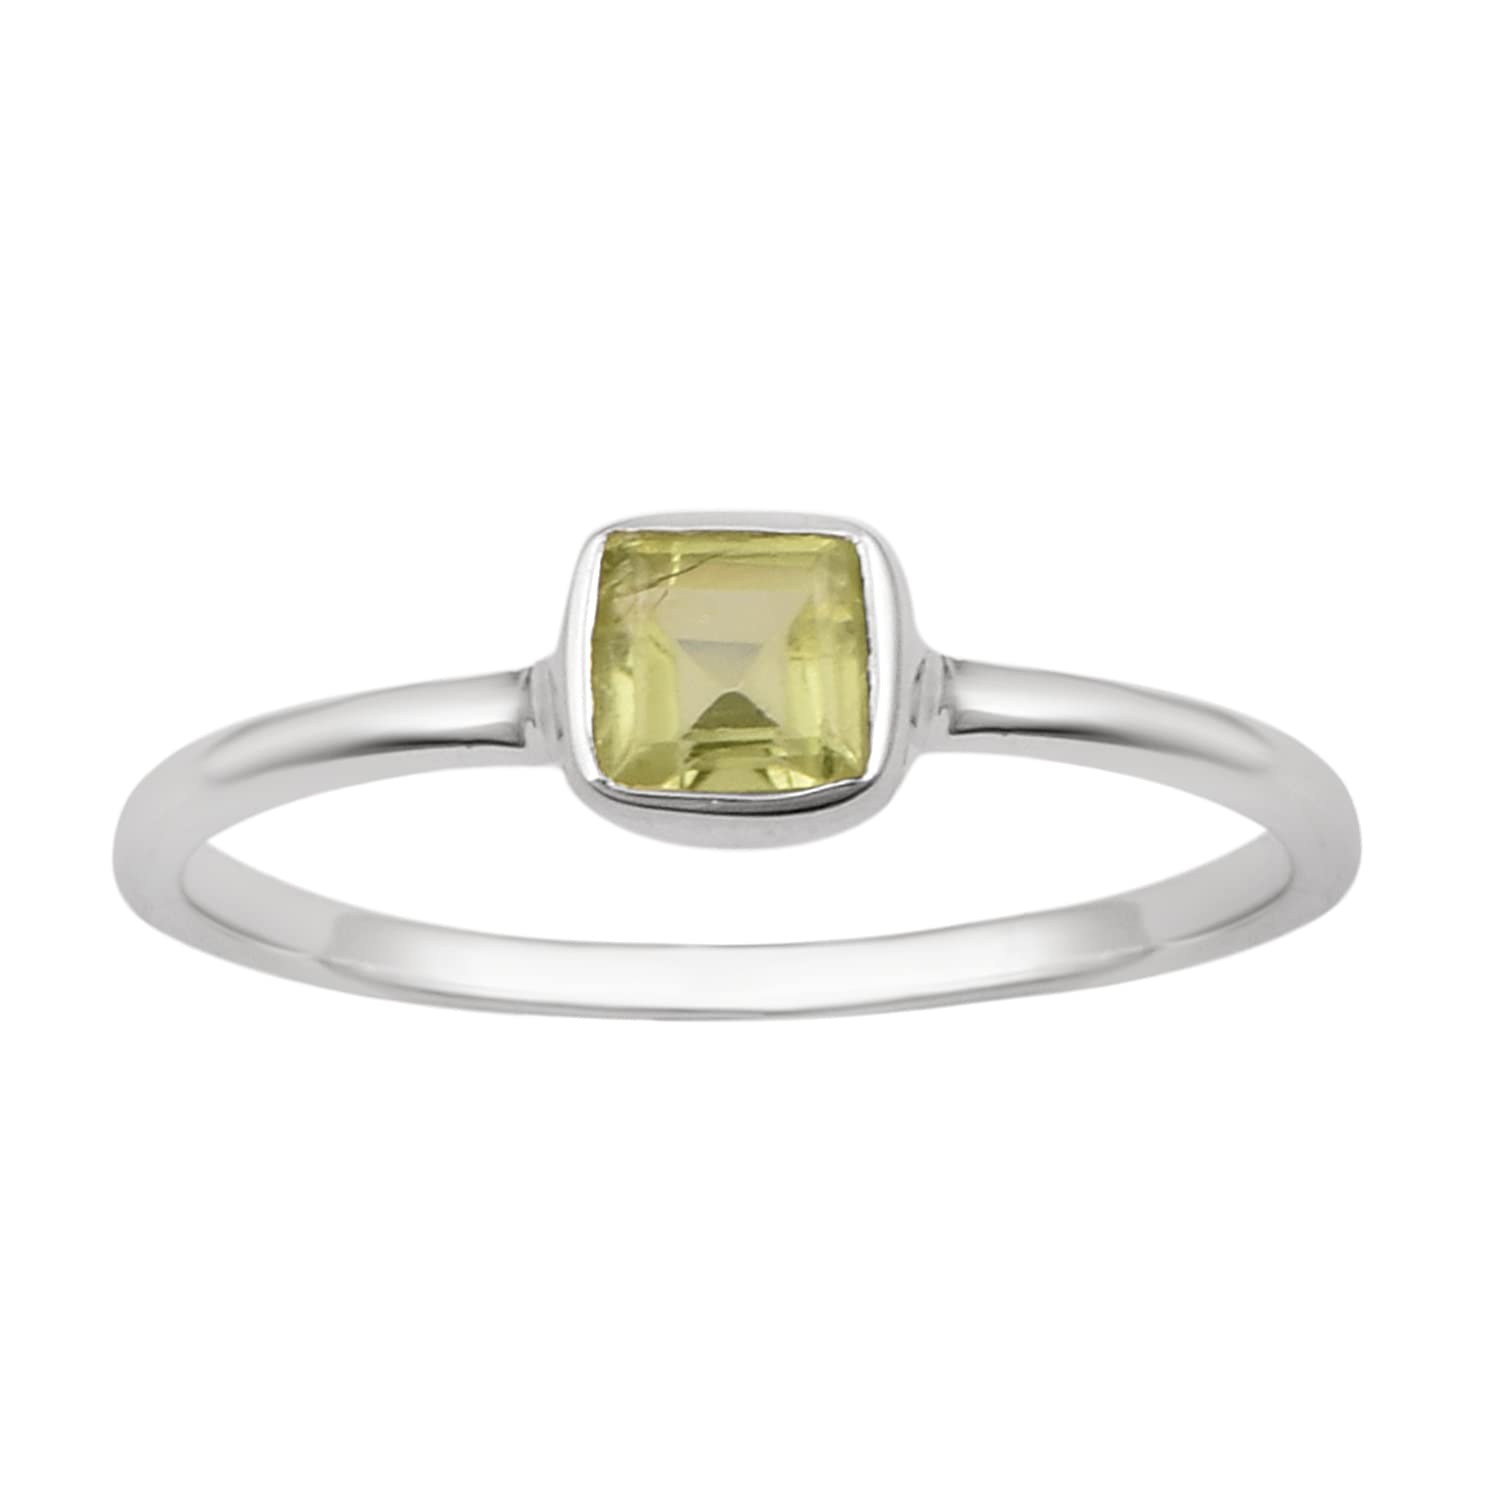 925 Sterling Silver 5 mm Square Cut Peridot Bezel Set Art Deco Ring Jewelry Women Girl Ring